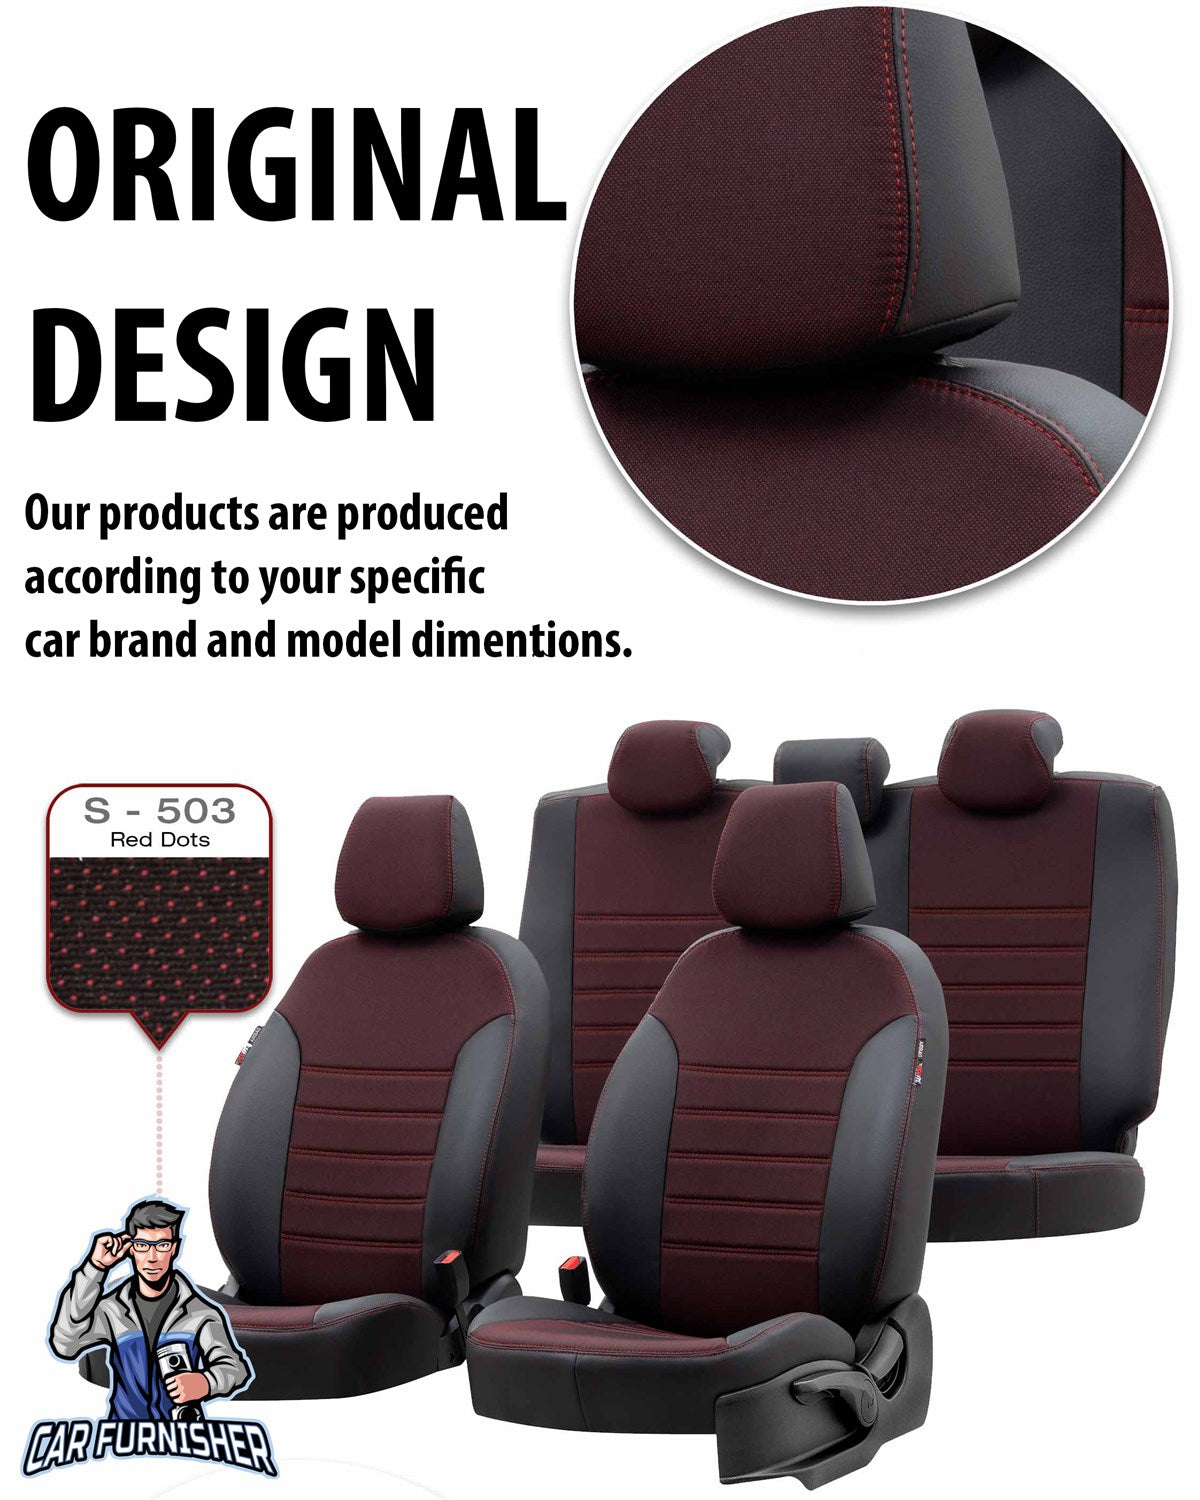 Volvo XC60 Seat Cover Paris Leather & Jacquard Design Dark Beige Leather & Jacquard Fabric